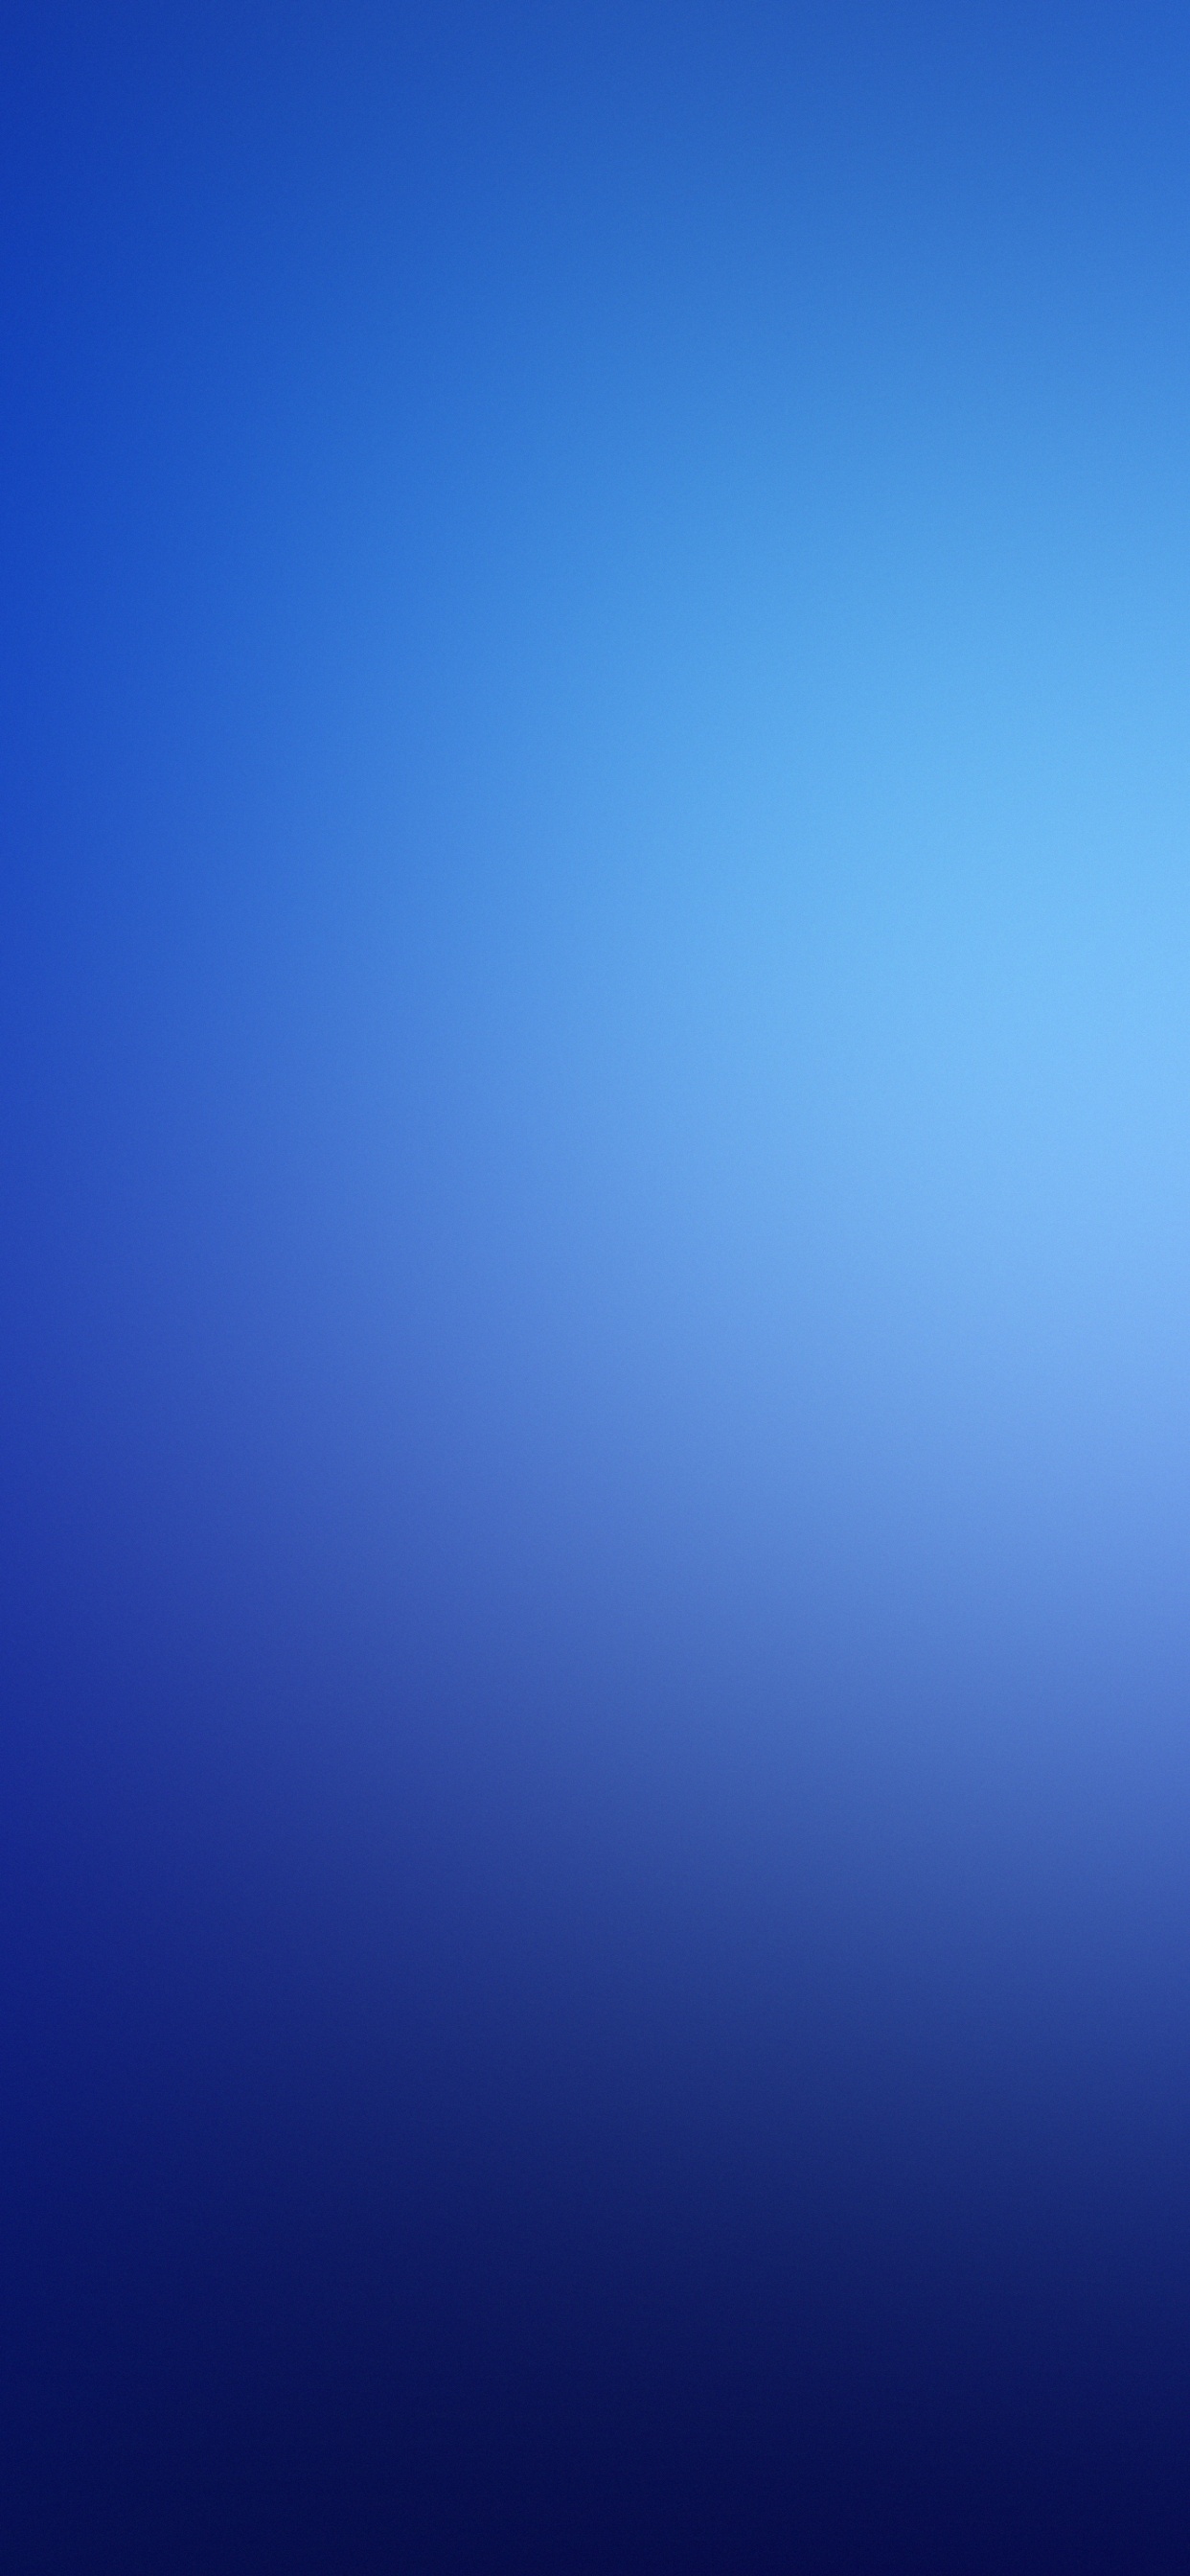 Blue and White Light Digital Wallpaper. Wallpaper in 1242x2688 Resolution